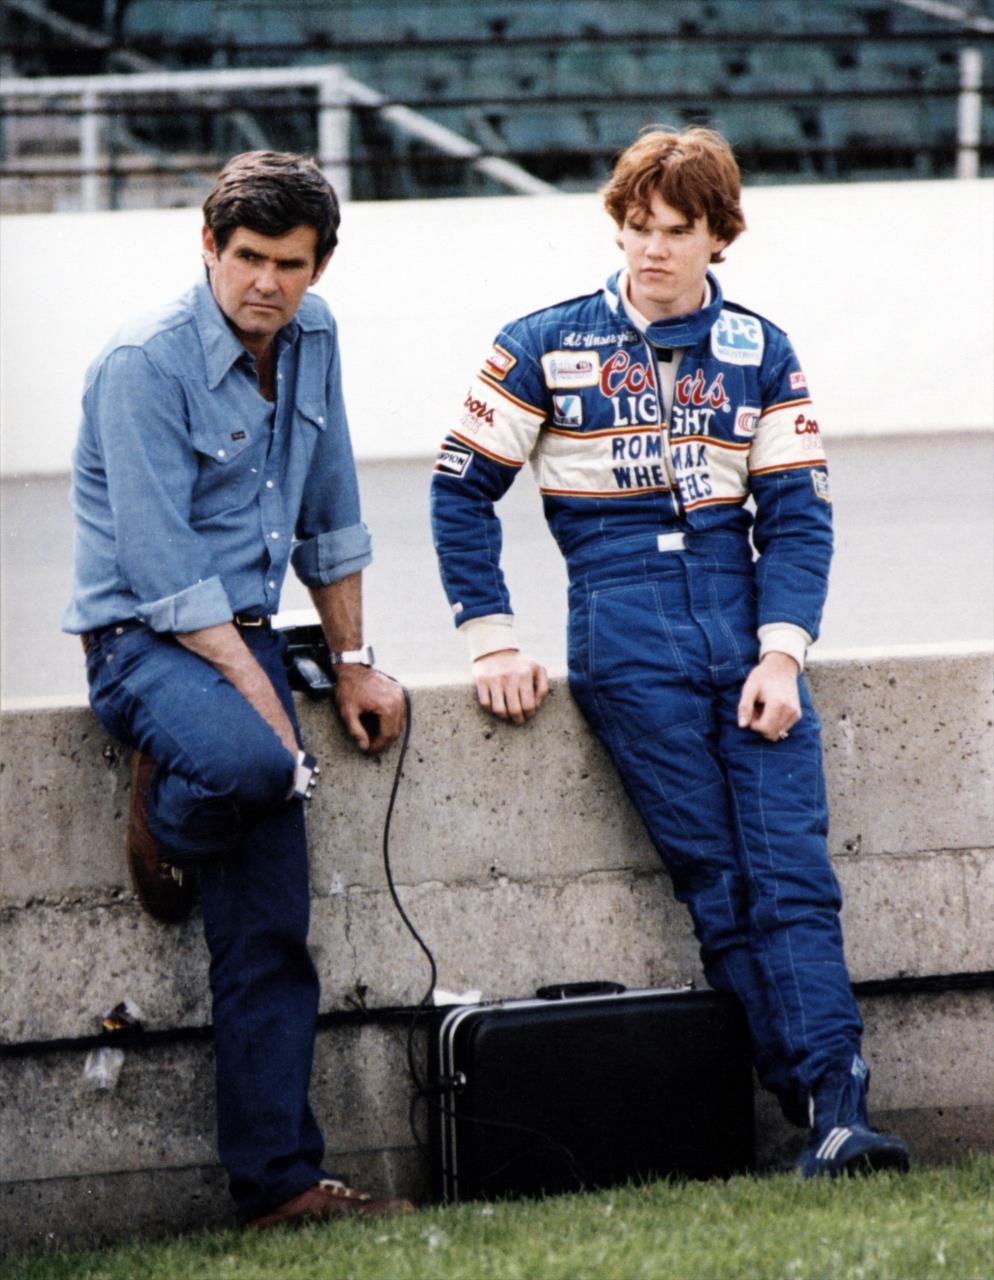 Al Unser with his son Al Unser Jr. in 1983.